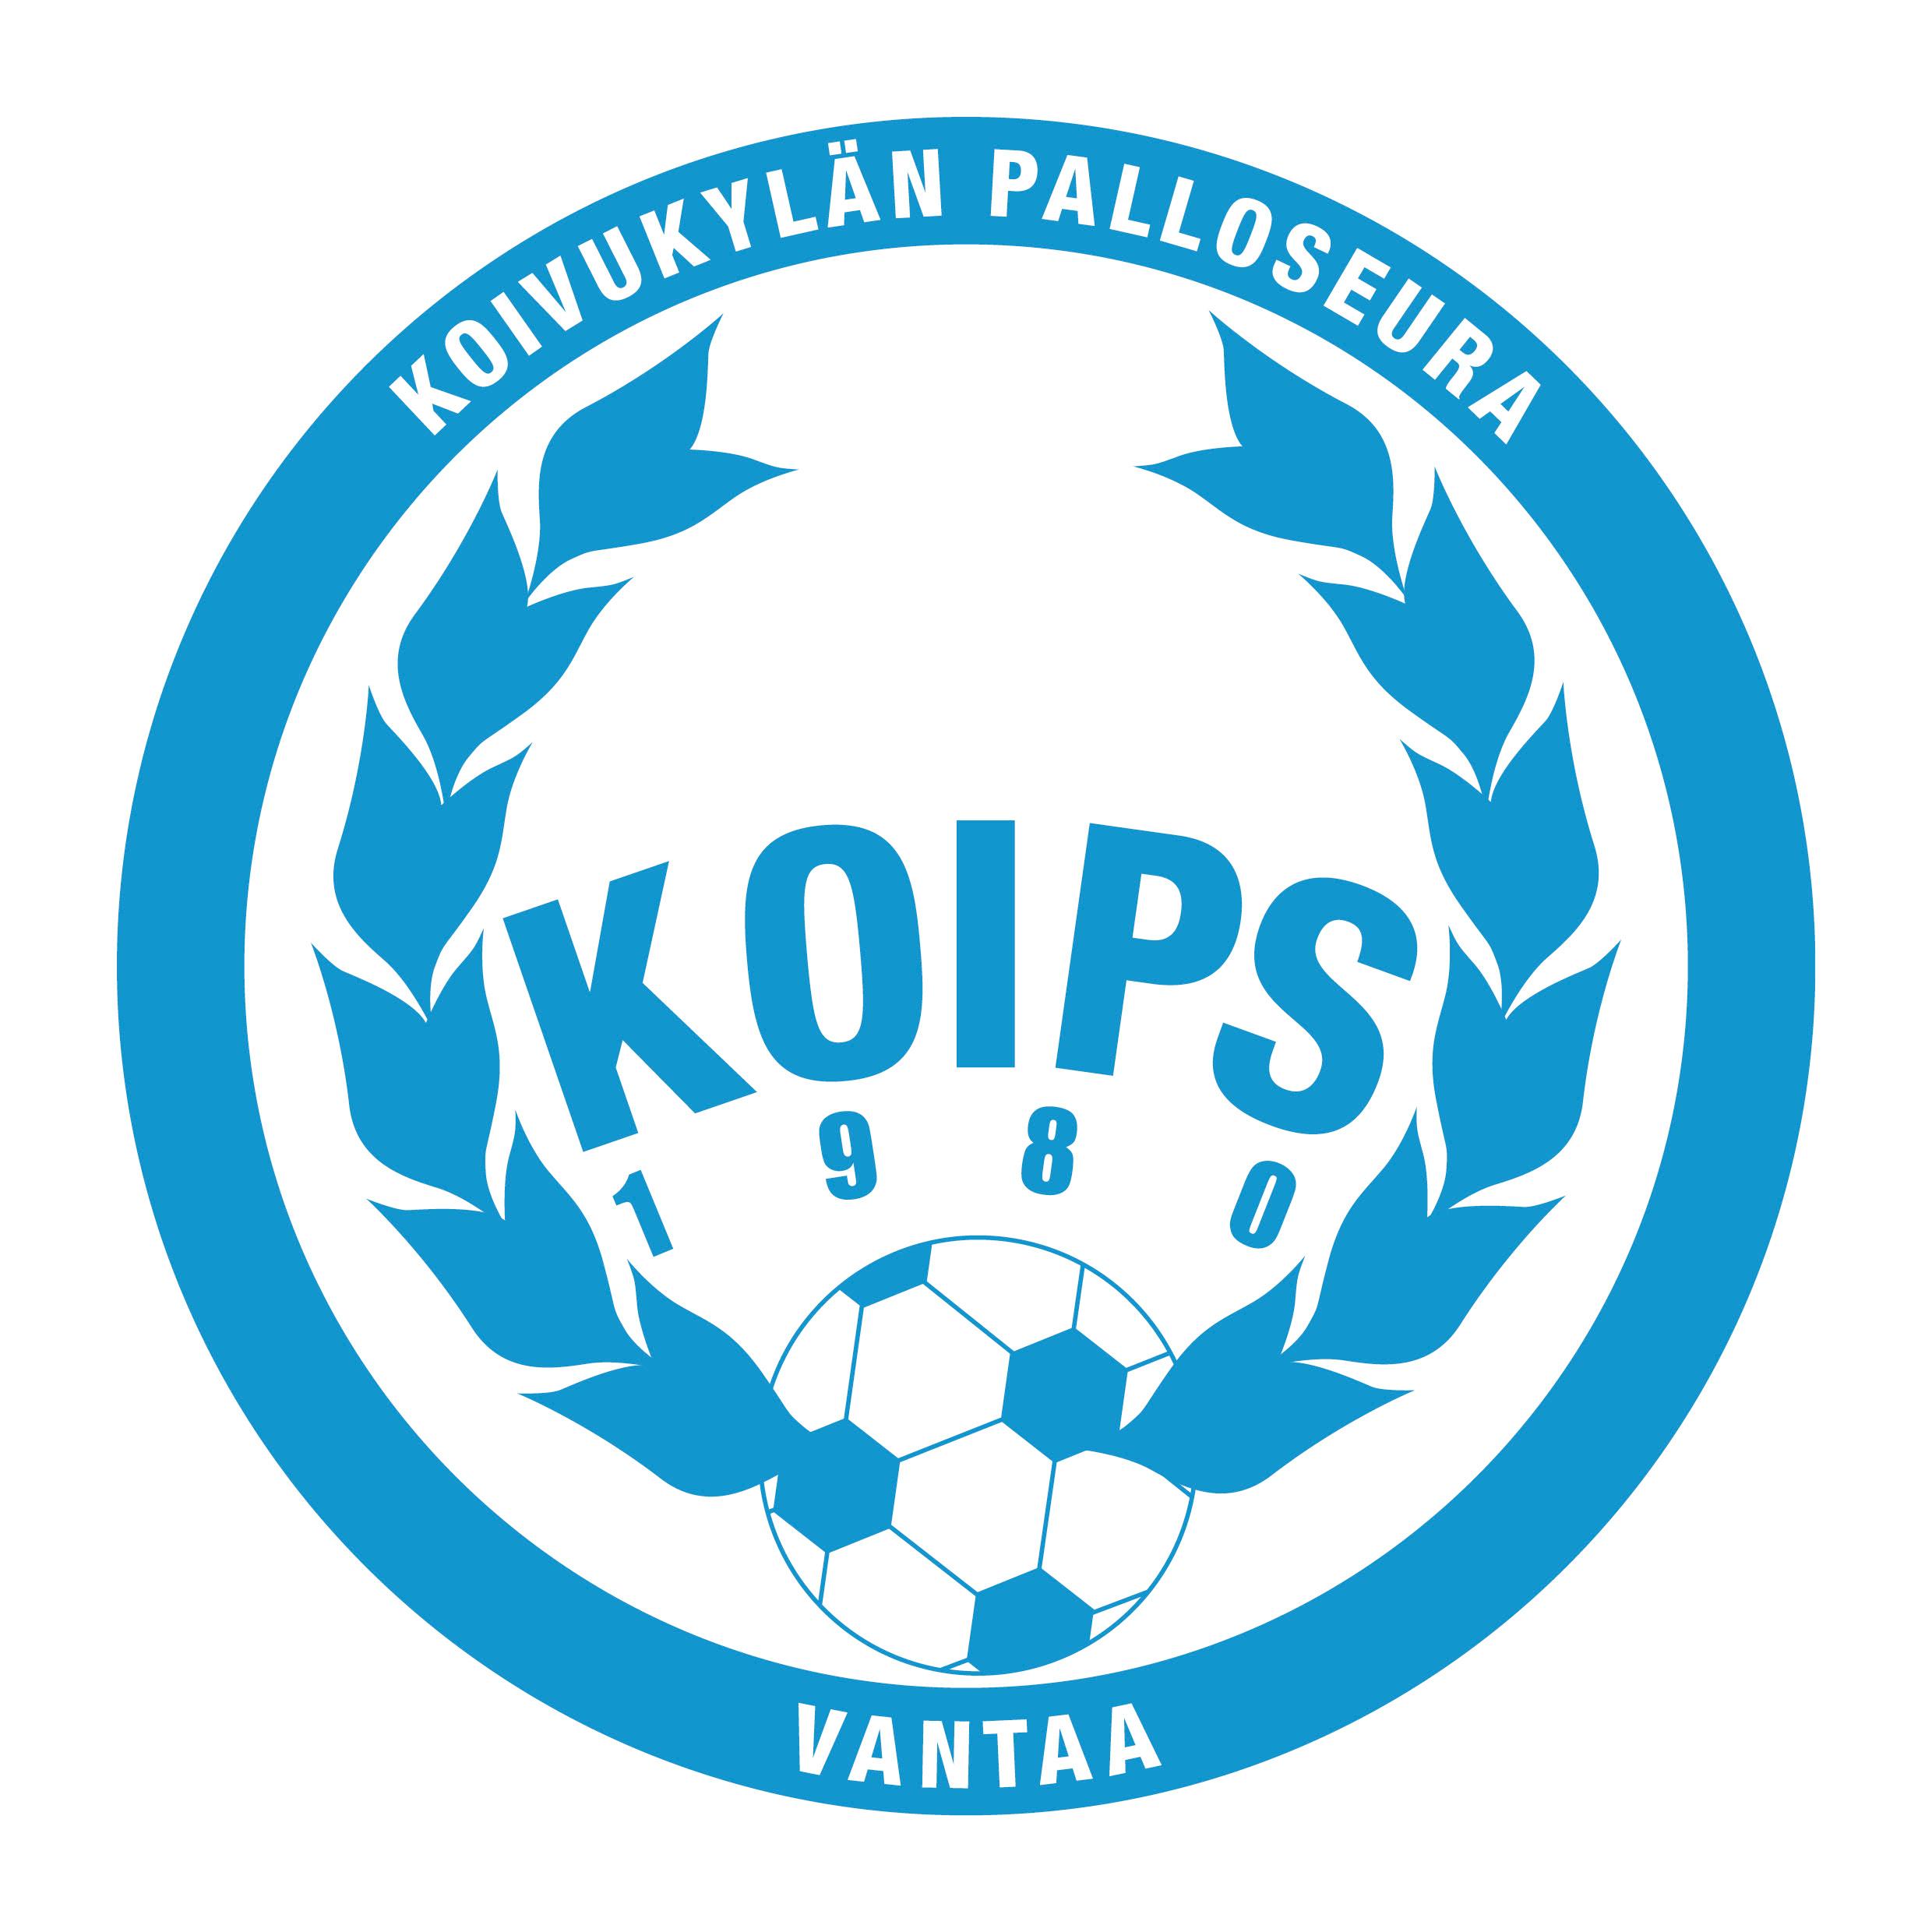 Koivukylän Palloseura seuran logo